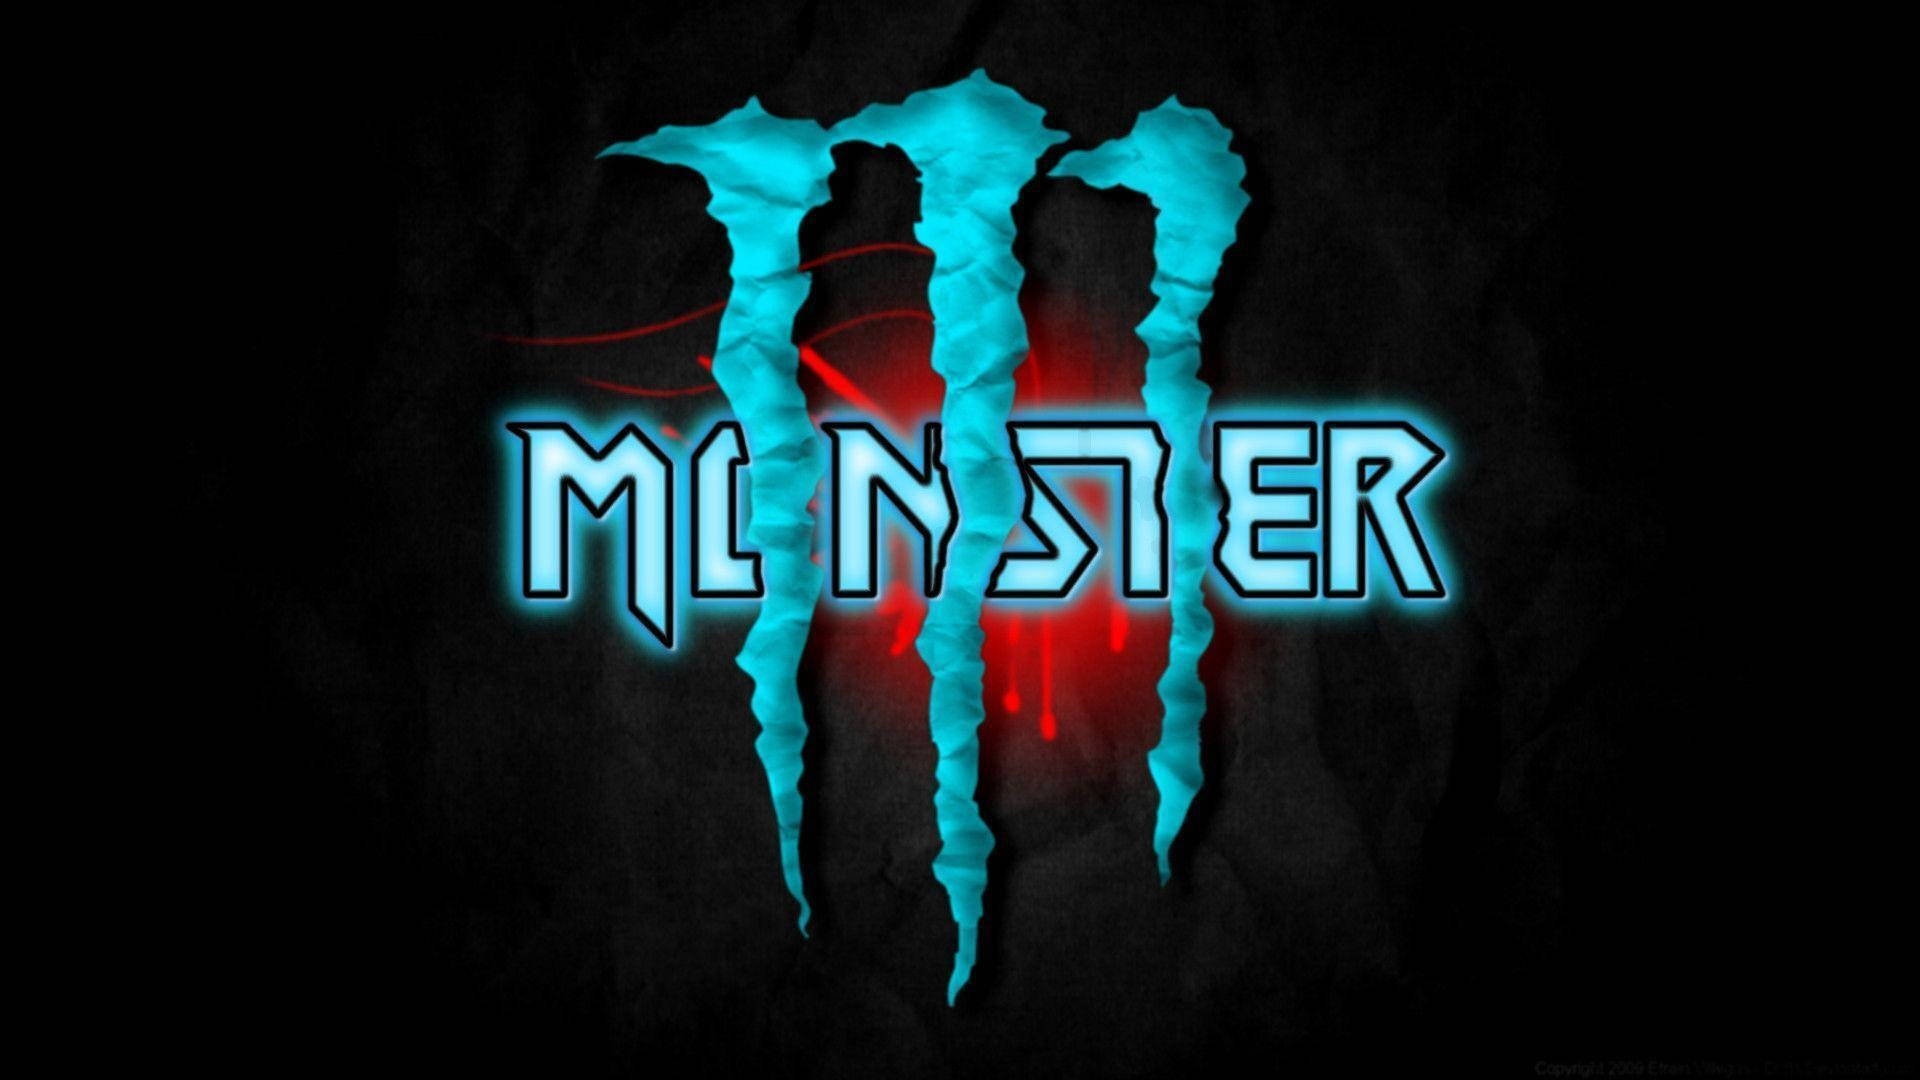 Top 999+ Monster Energy Wallpaper Full HD, 4K✅Free to Use